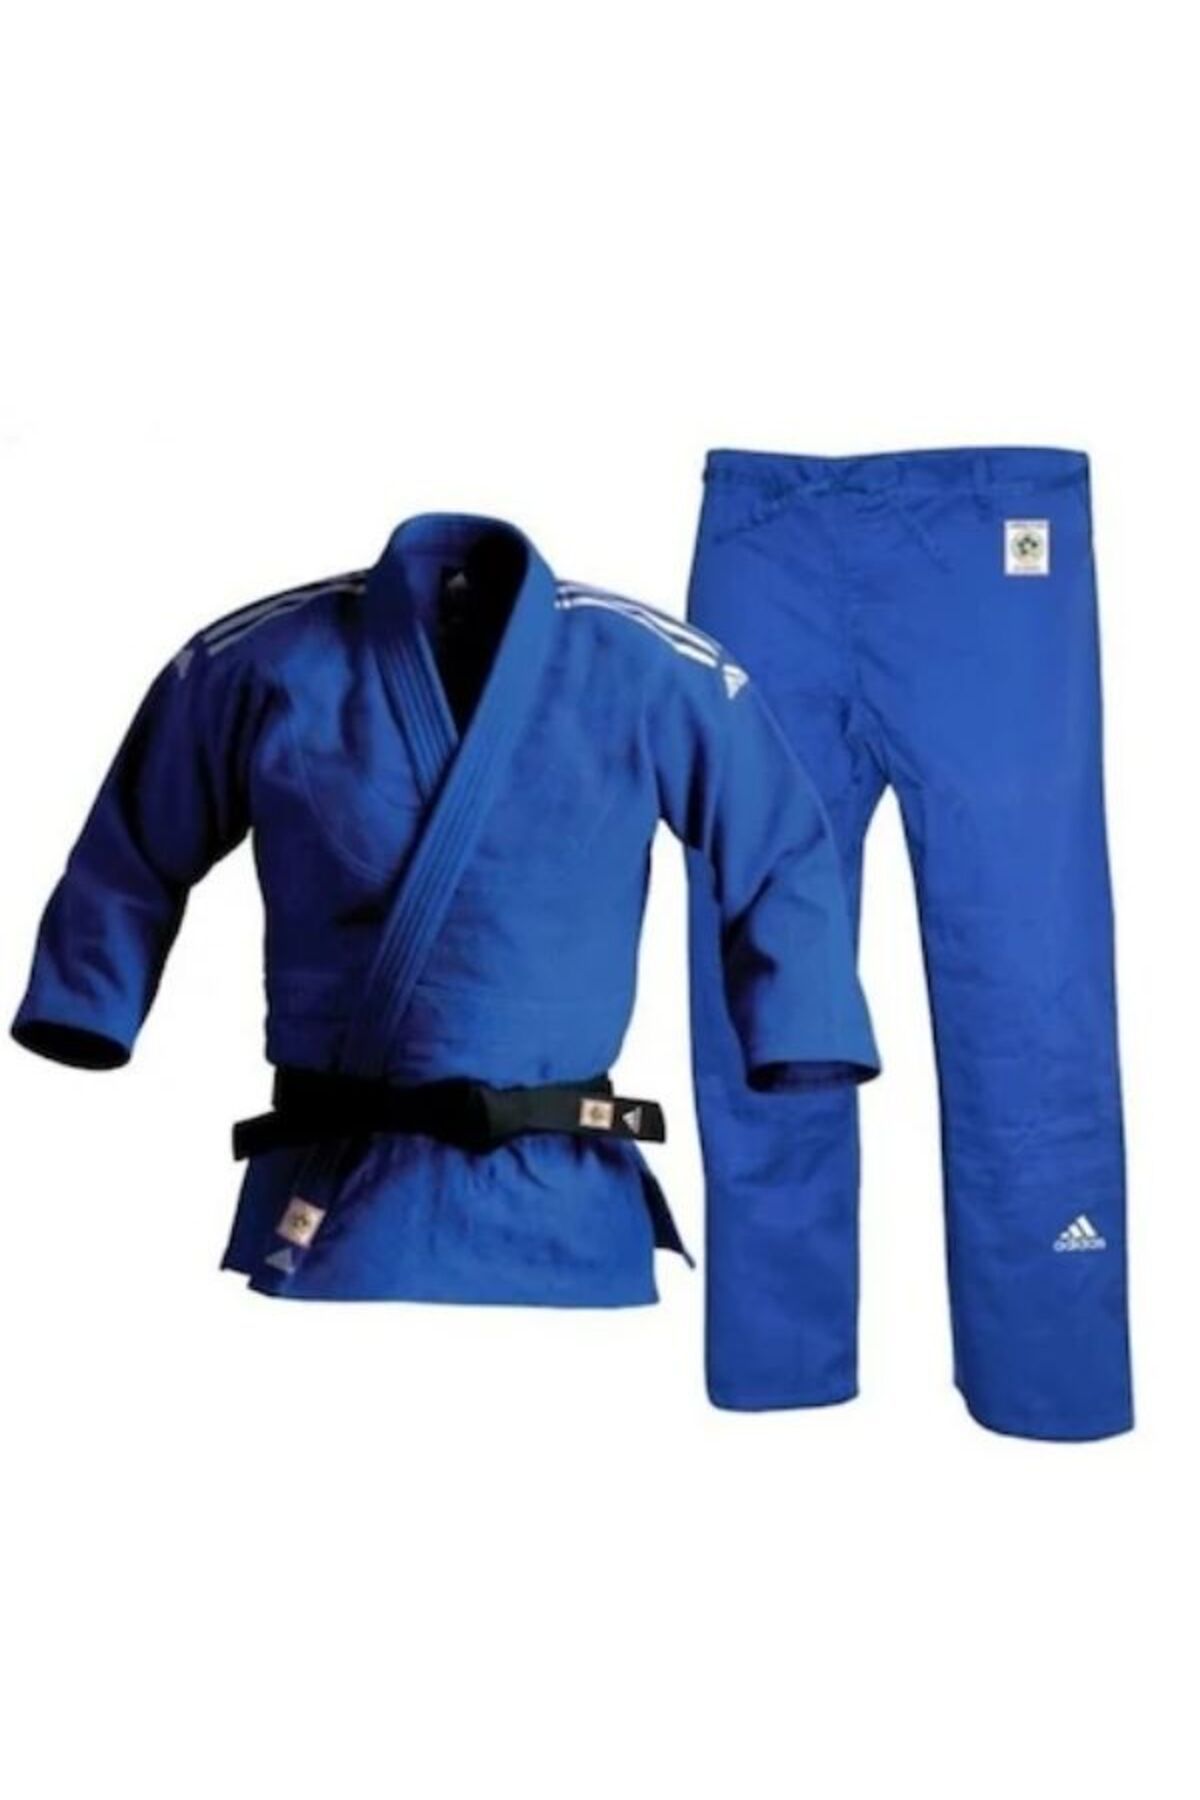 adidas Ijf Onaylı Judo Elbisesi Mavi